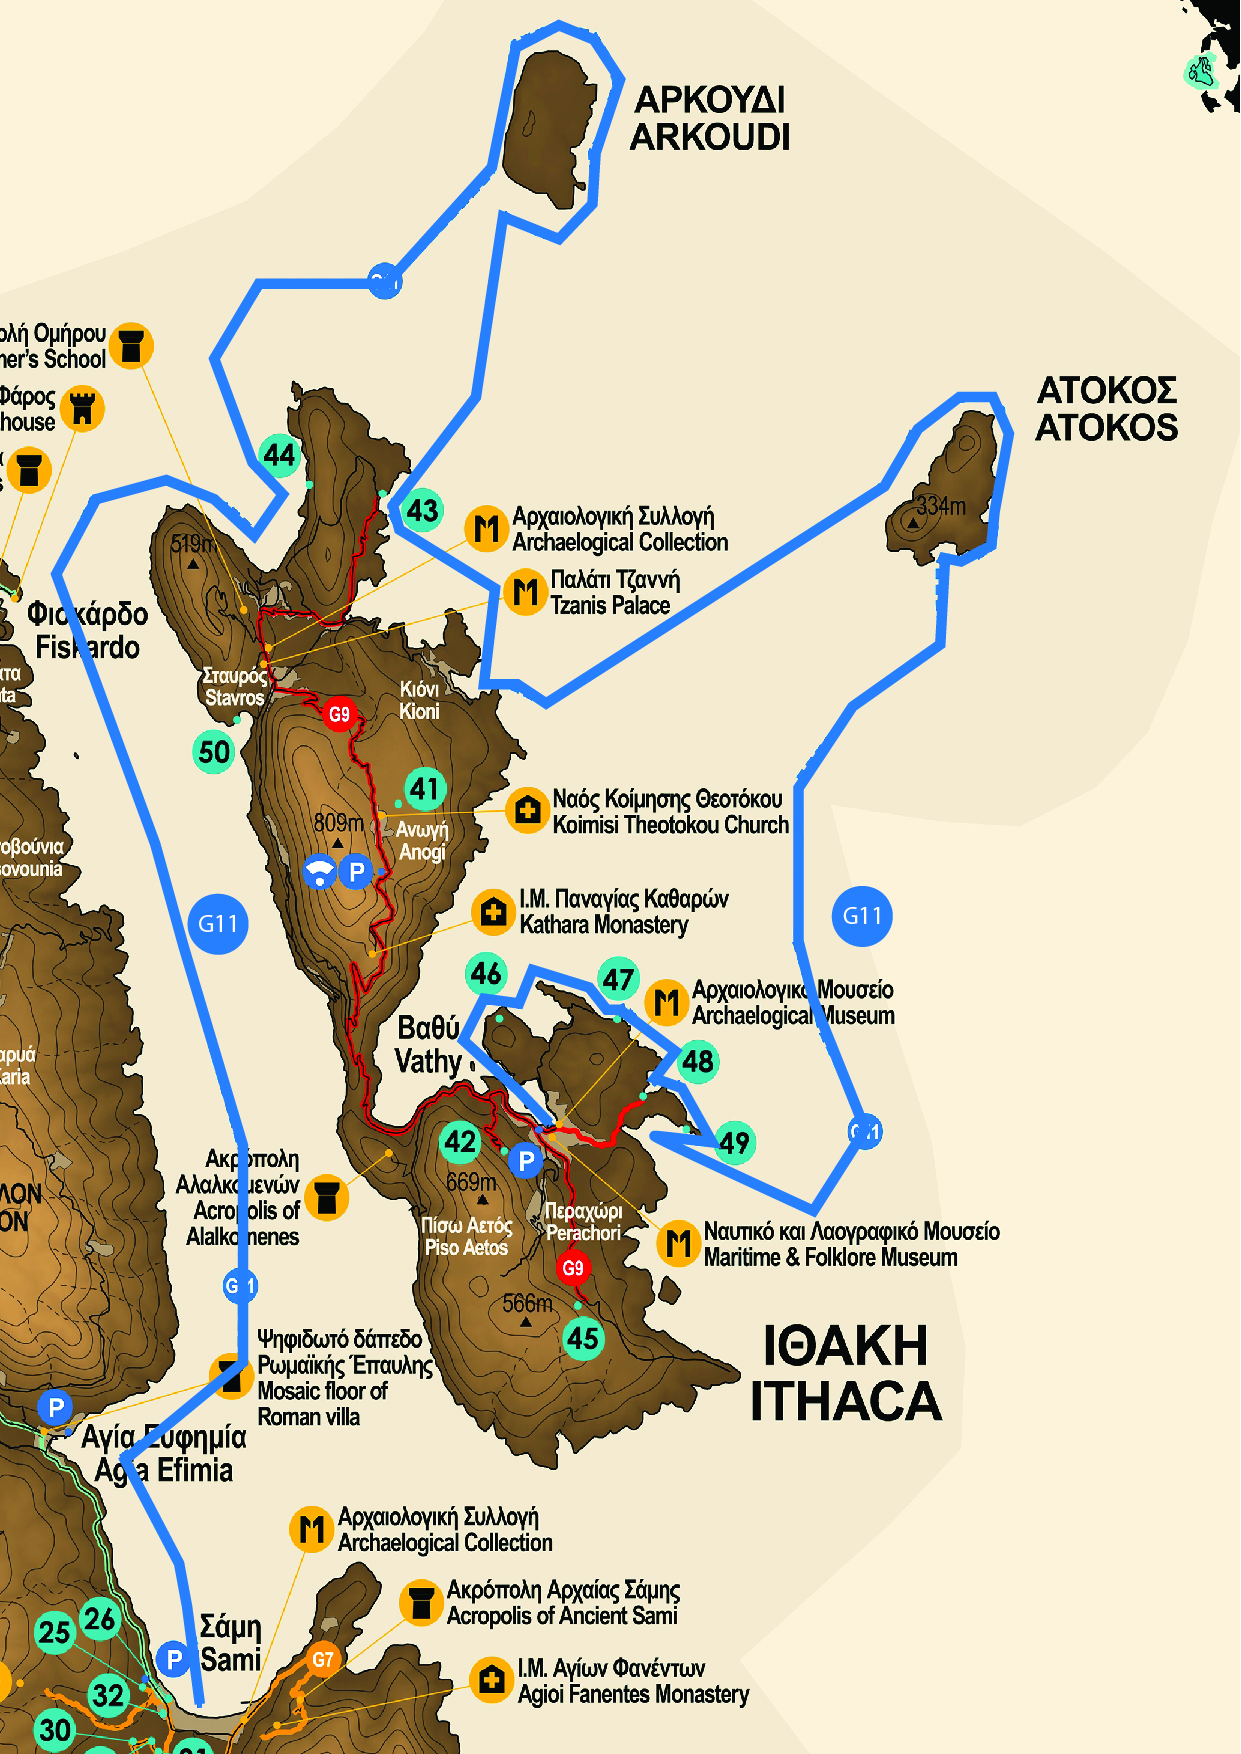 Ithaca marine georoute G11 map